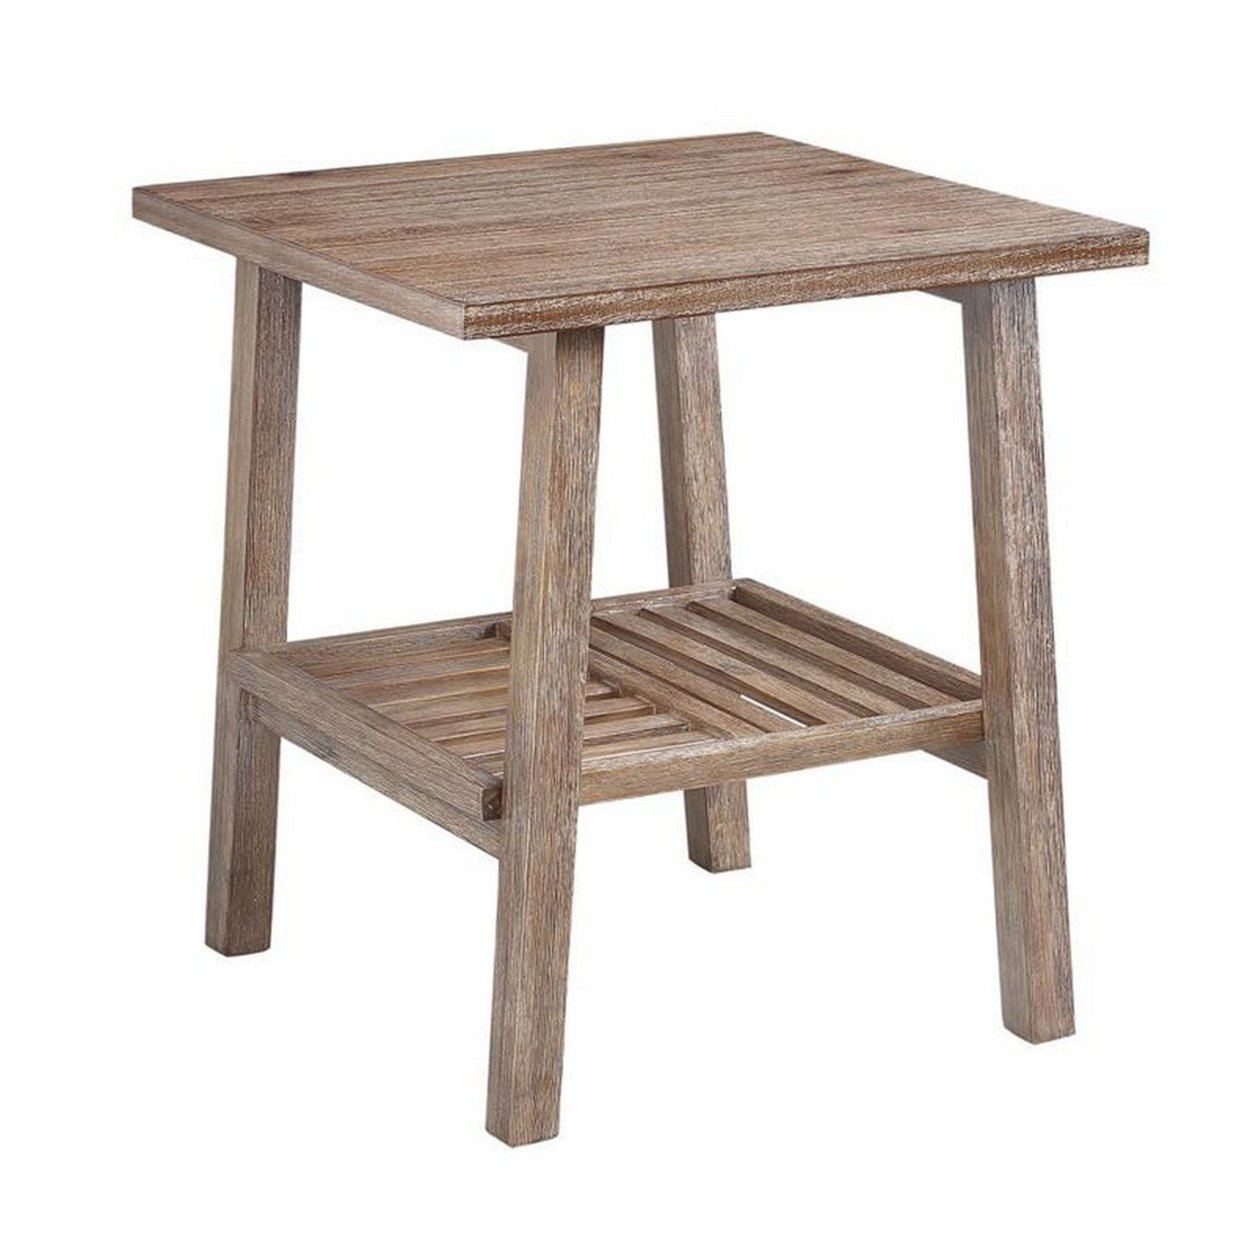 Farmhouse Wooden End Table With Slatted Bottom Shelf, Rustic Brown- Saltoro Sherpi